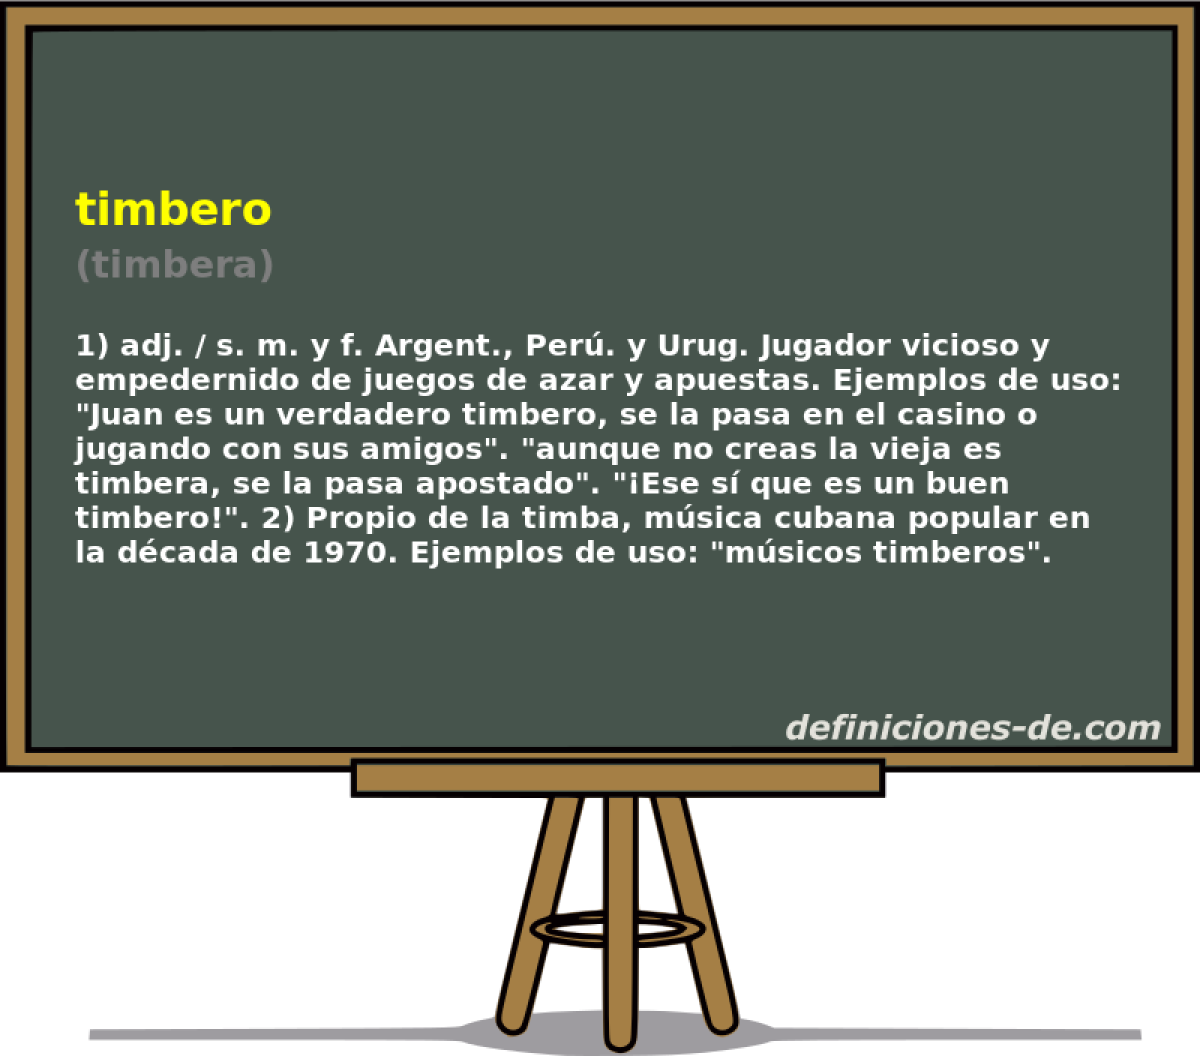 timbero (timbera)